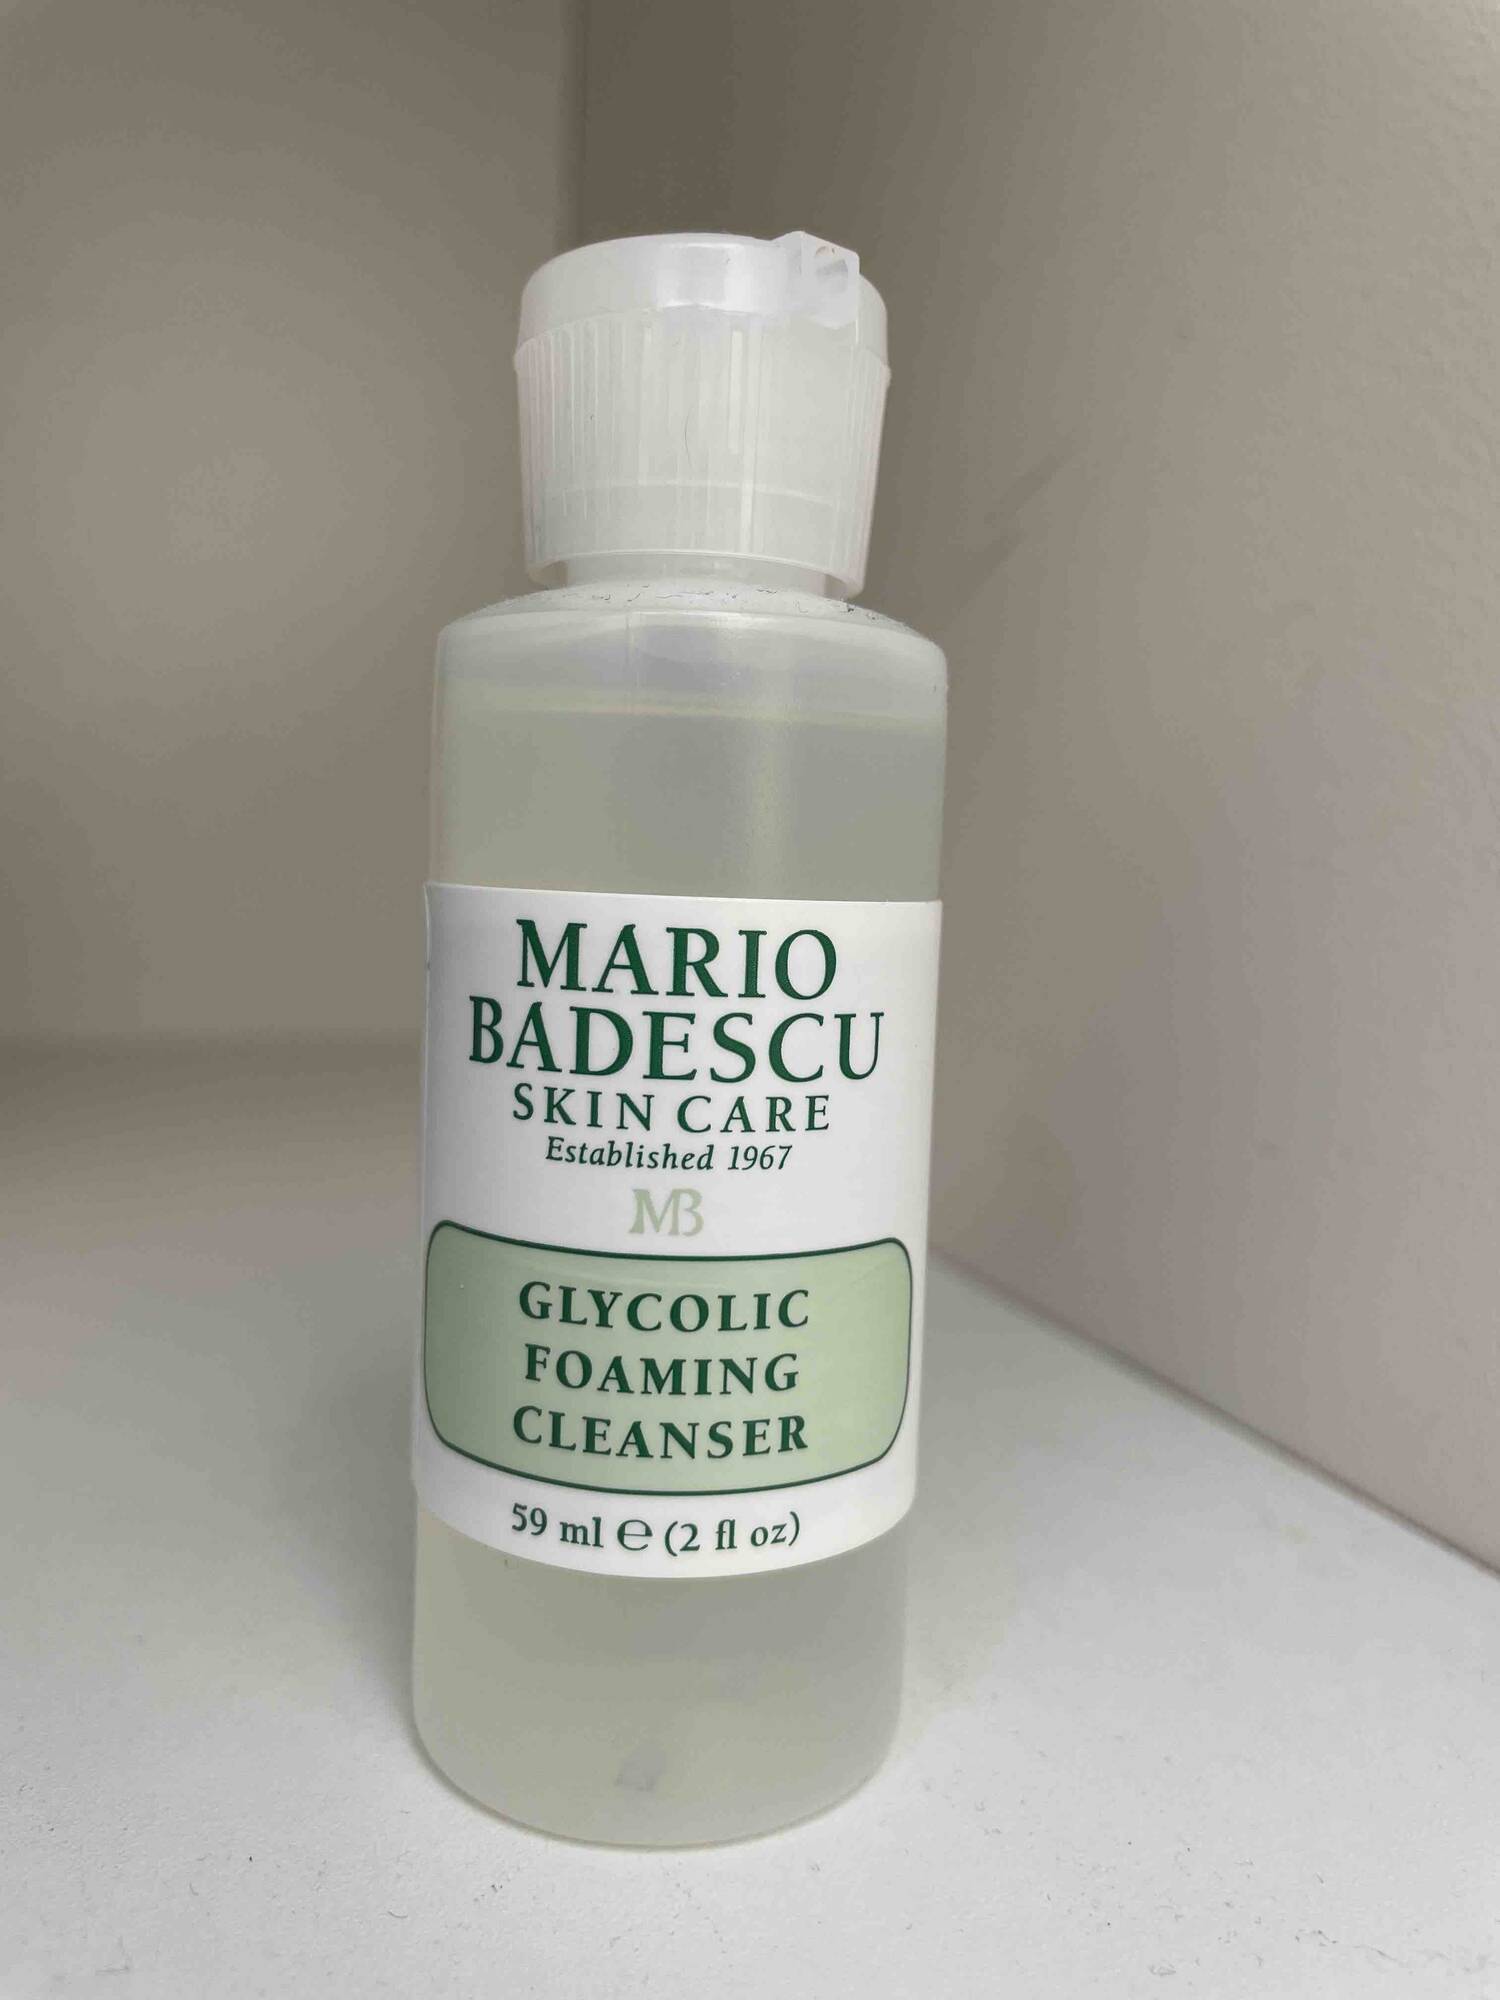 MARIO BADESCU - Glycolic foaming cleanser - Skin care